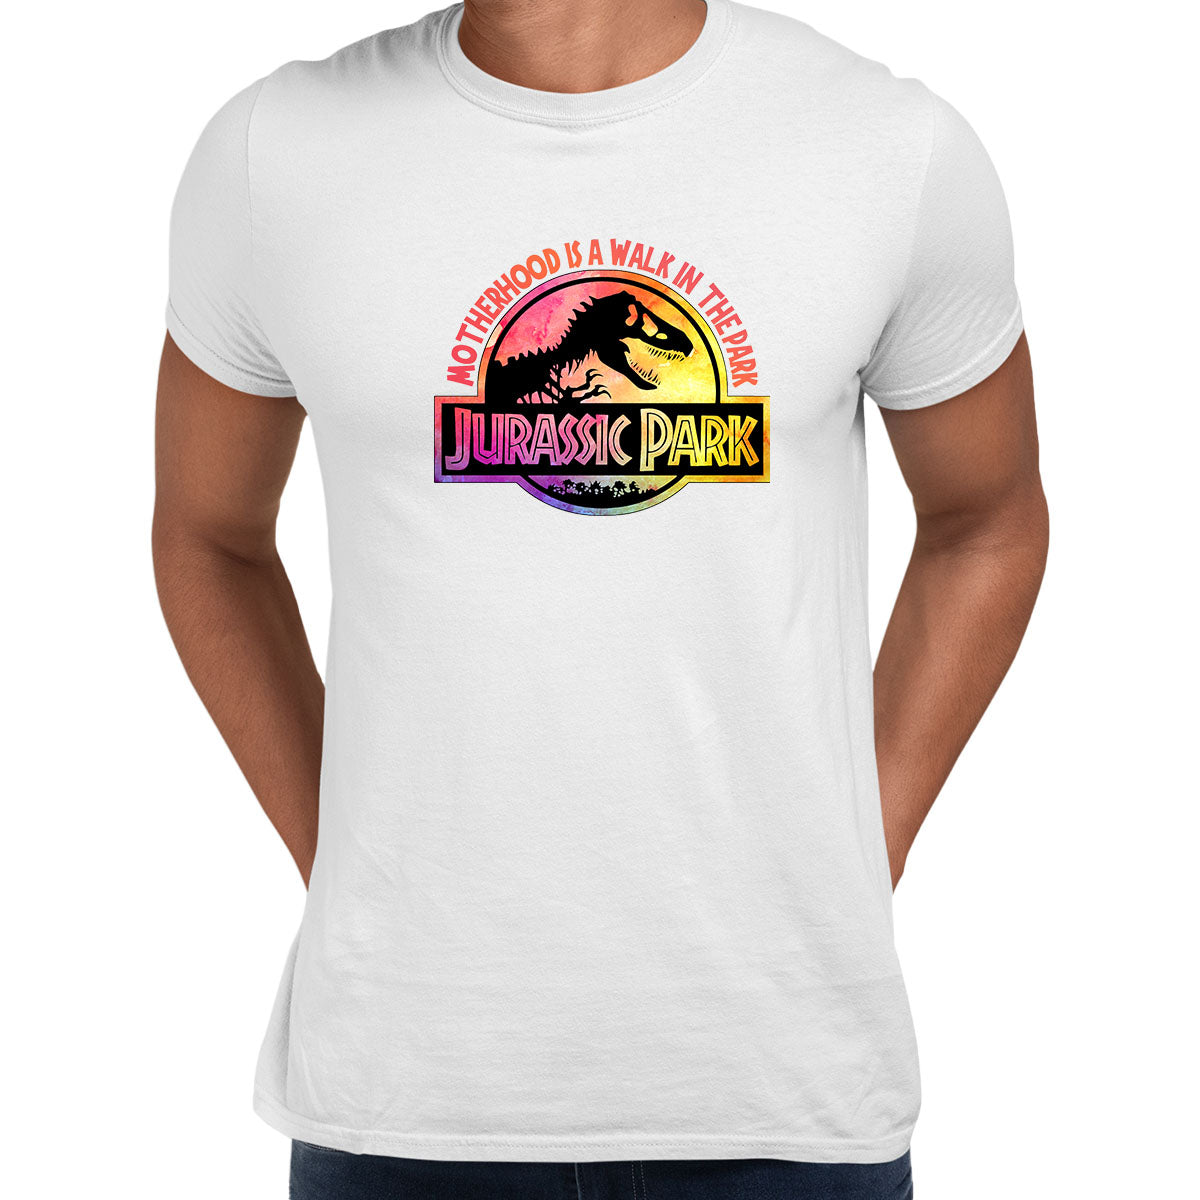 Jurassic Park T-shirt Jurassic Park Classic Movie T-shirt Soft and Comfortable - Kuzi Tees